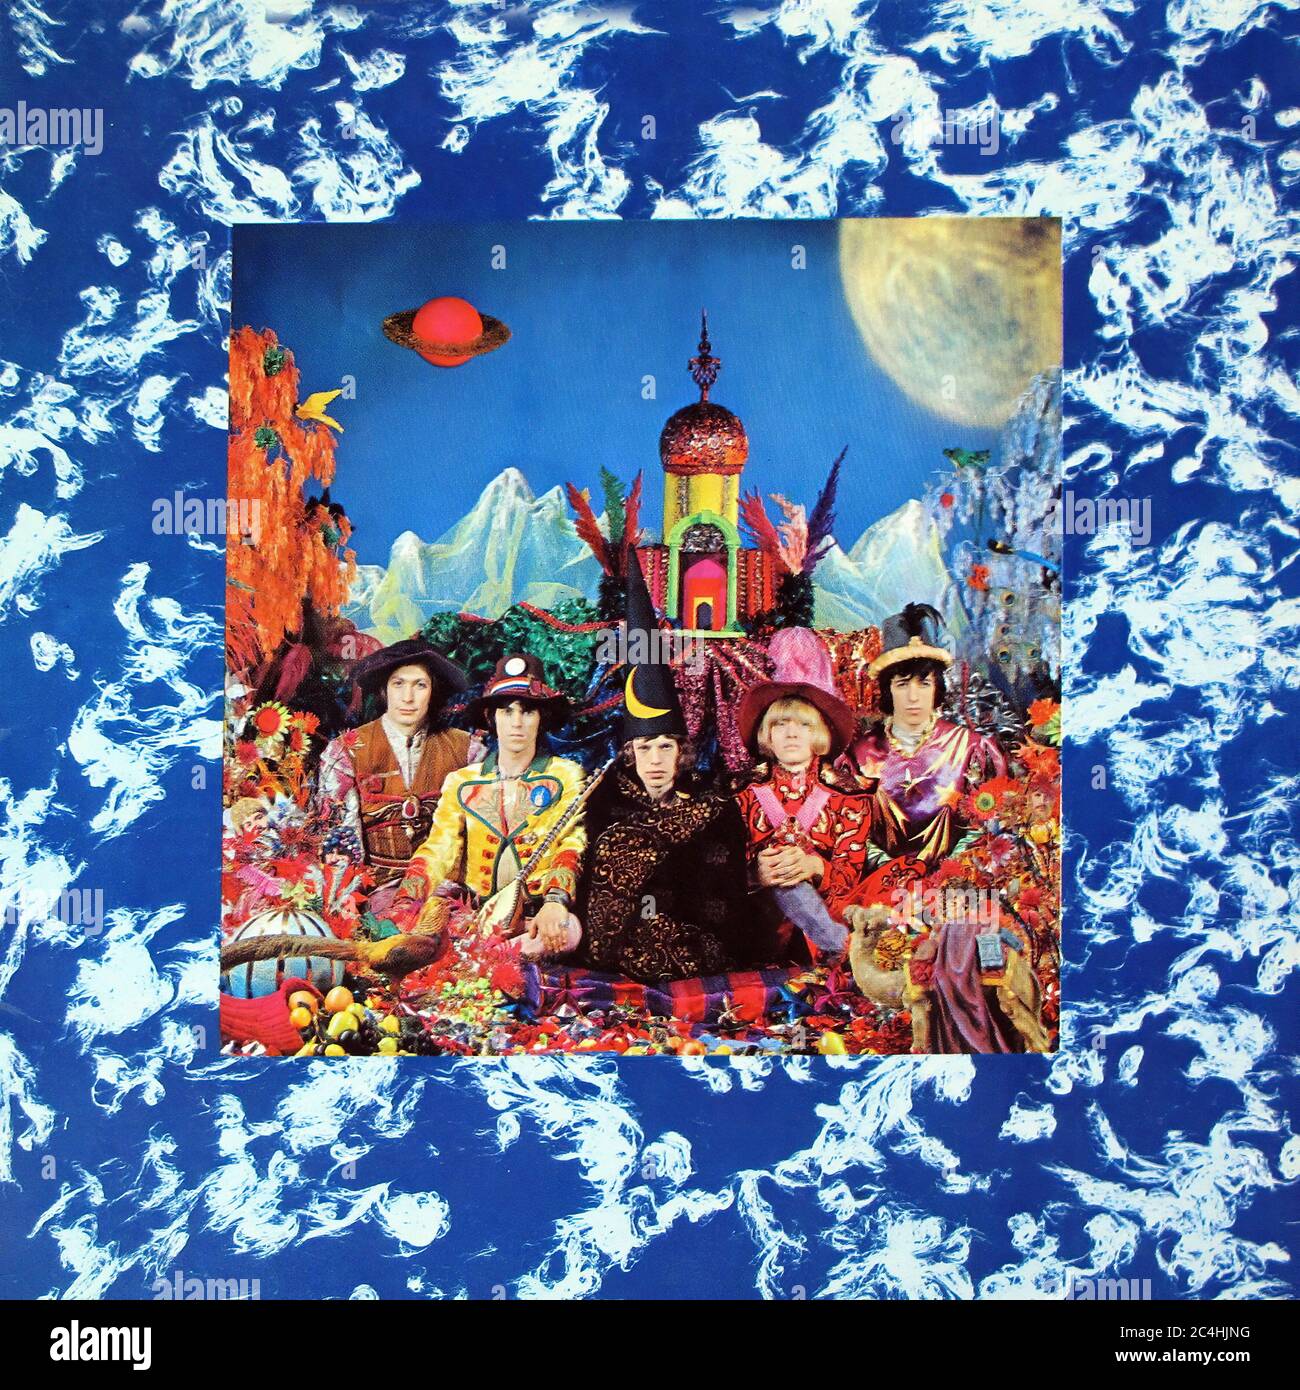 Rolling Stones Their Satanic Majesties Request  12'' Lp Vinyl - Vintage Record Cover Stock Photo